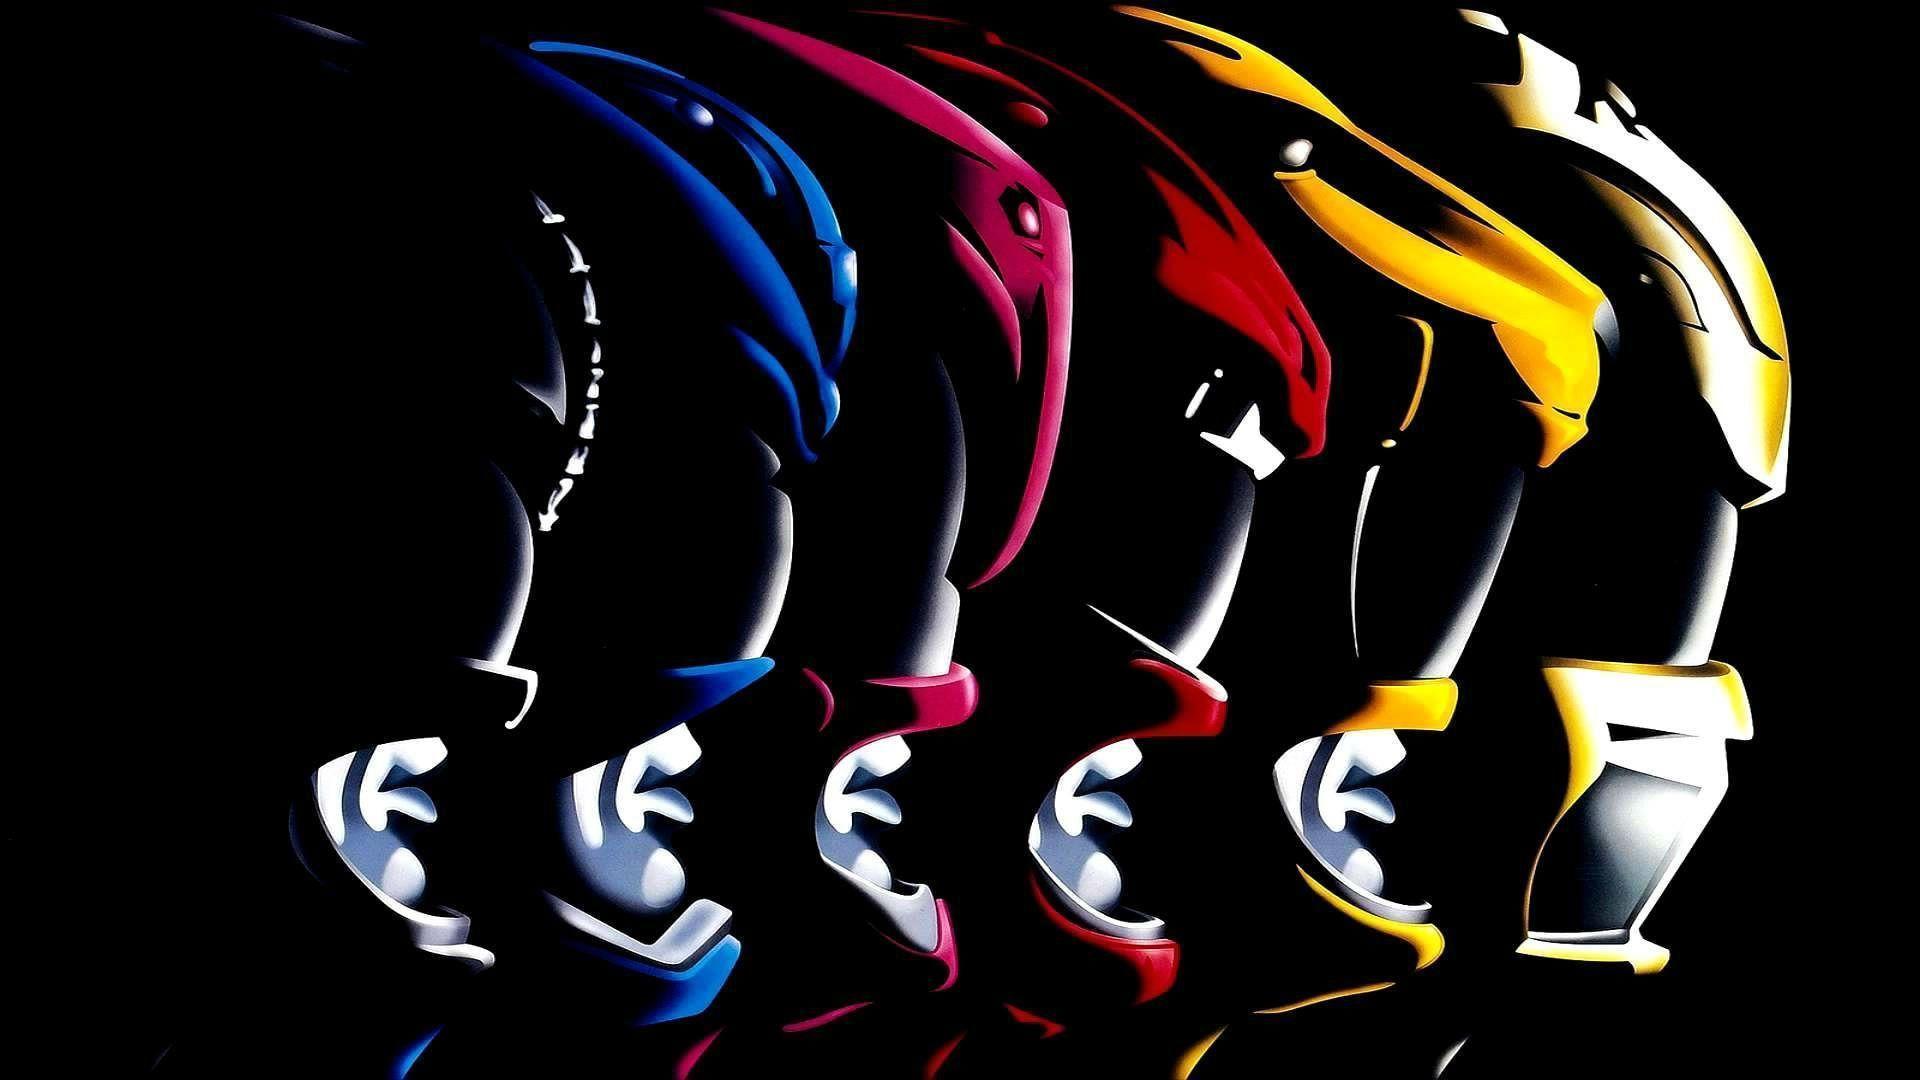 Power Rangers Wallpaper Download Free. Wallpaper, Background